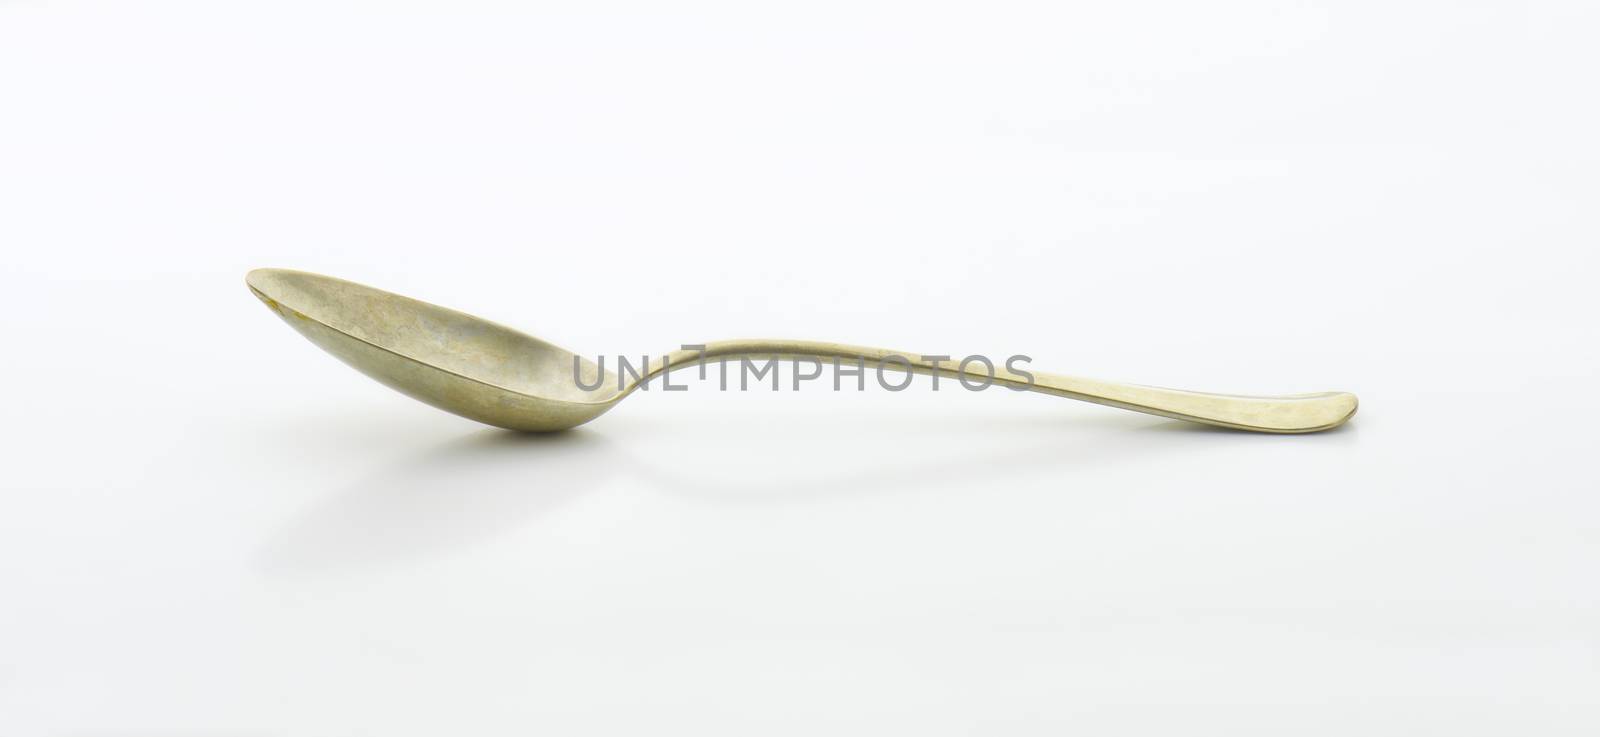 Old silver spoon by Digifoodstock